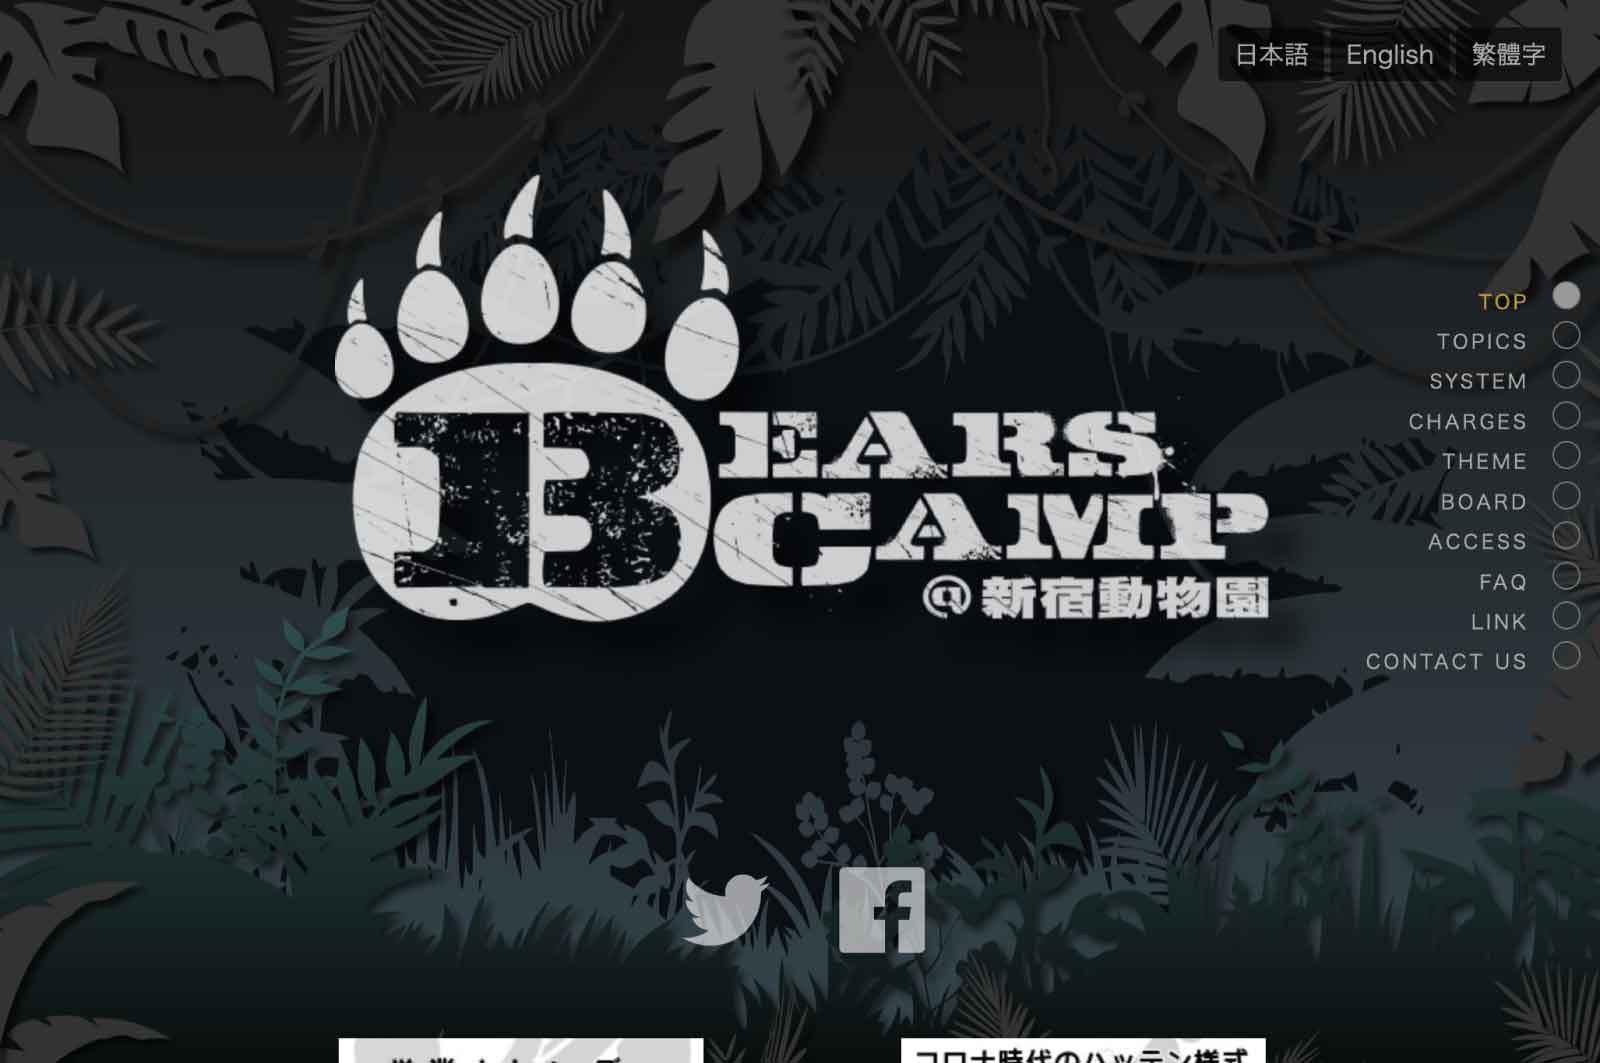 BEARS CAMP